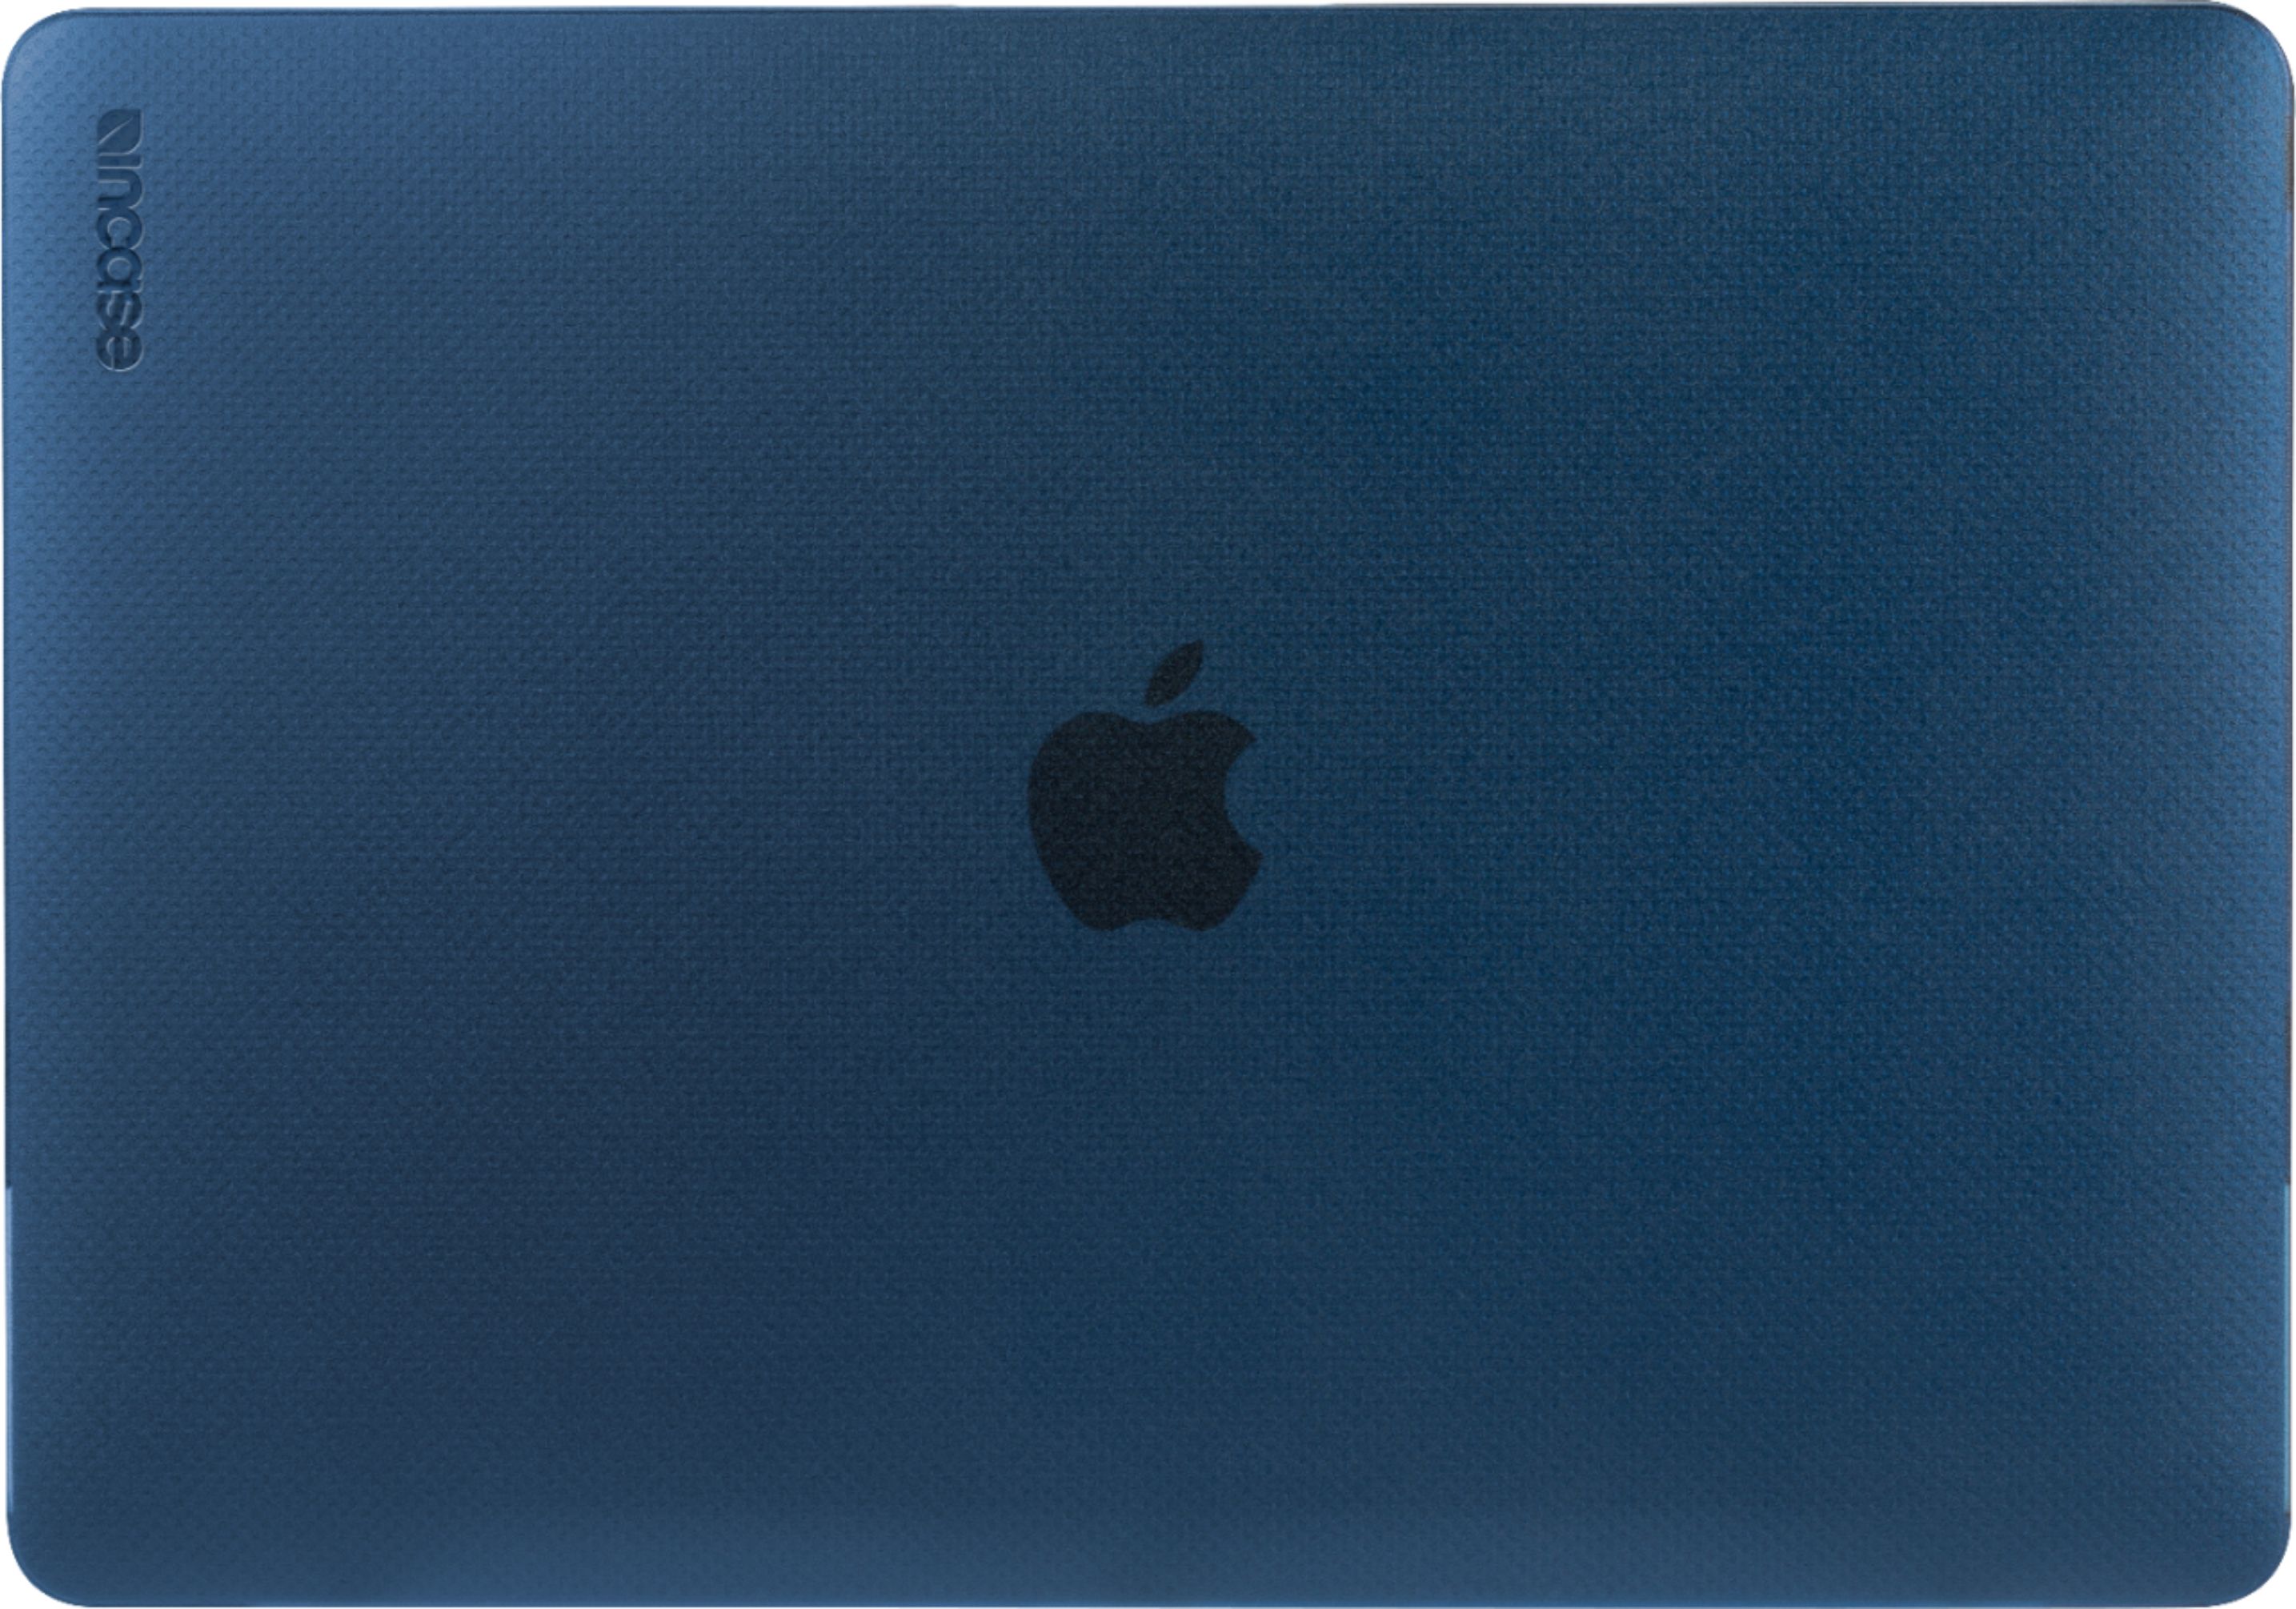 Macbook pro 13 case with apple cutout shape baby kino